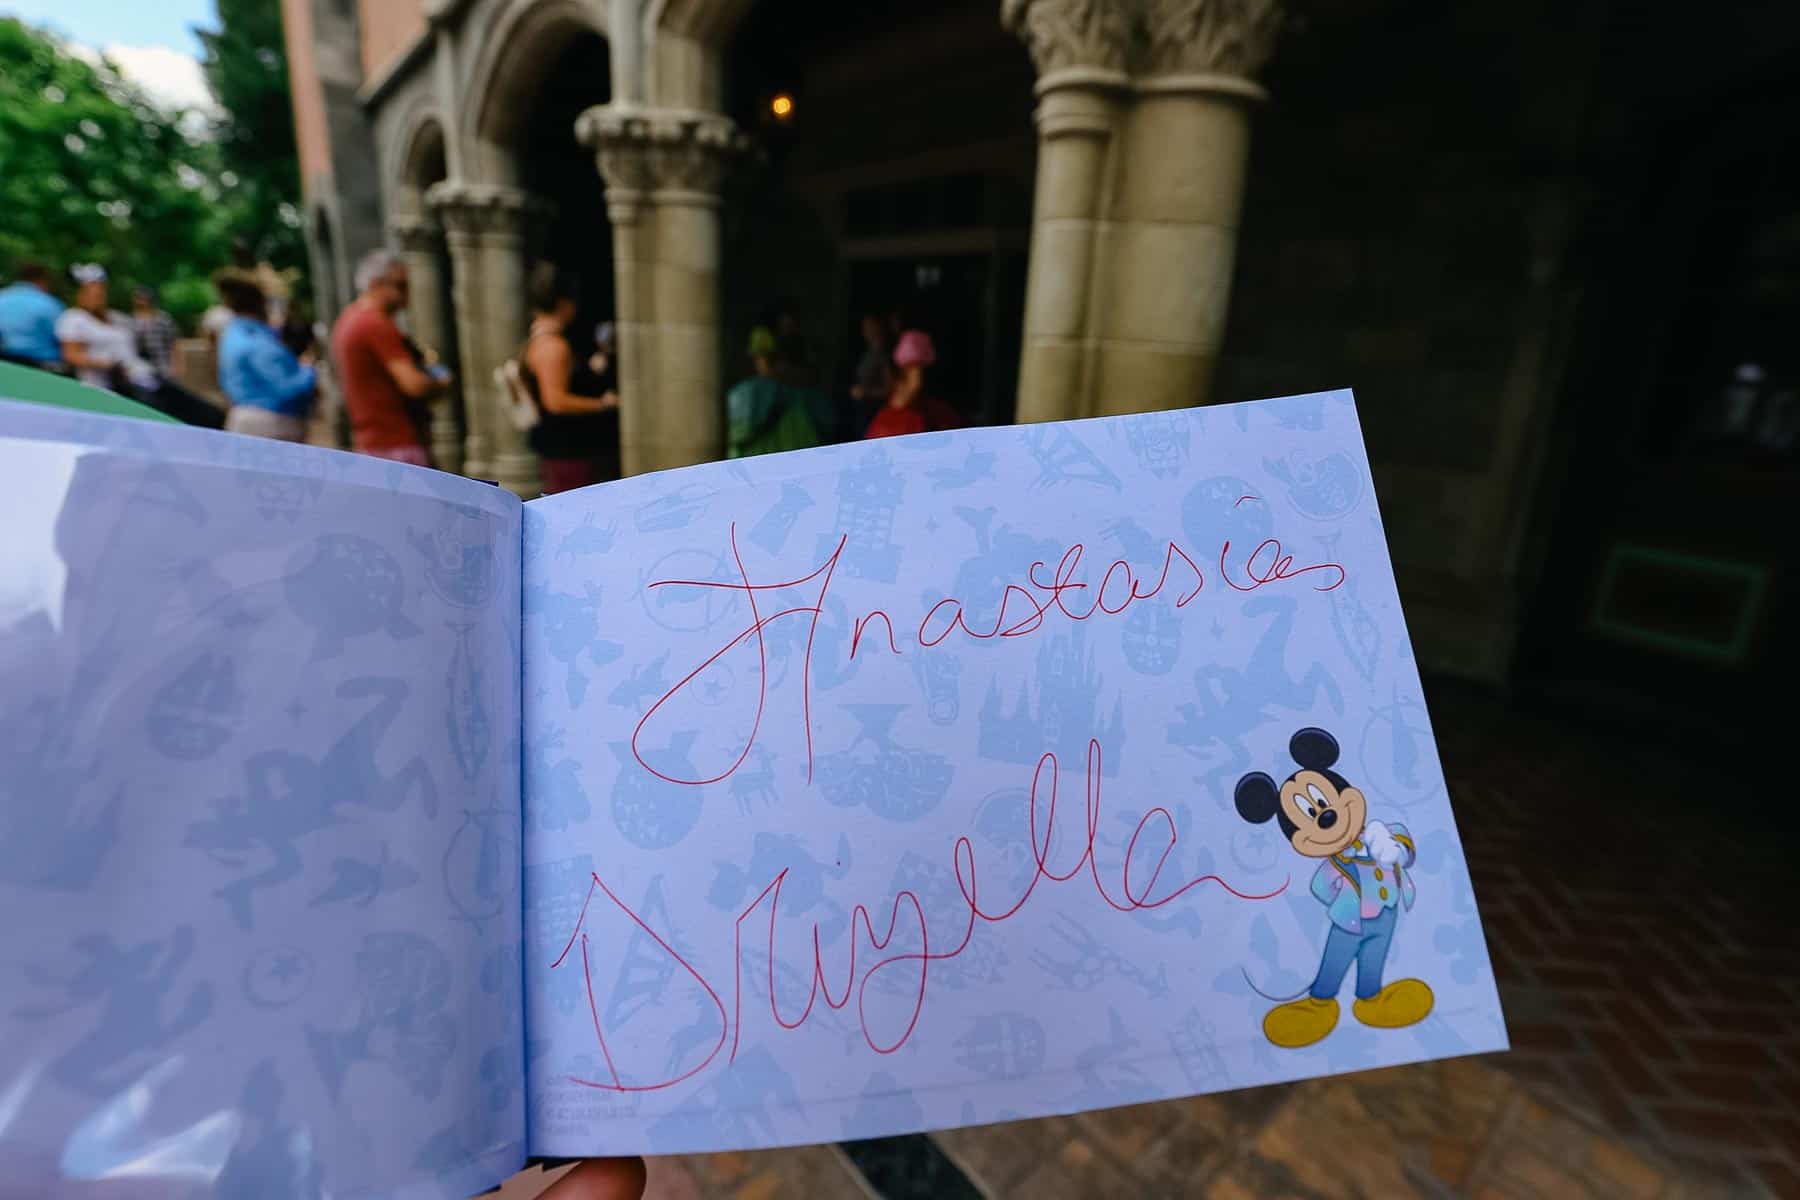 Anastasia and Drizella's autographs